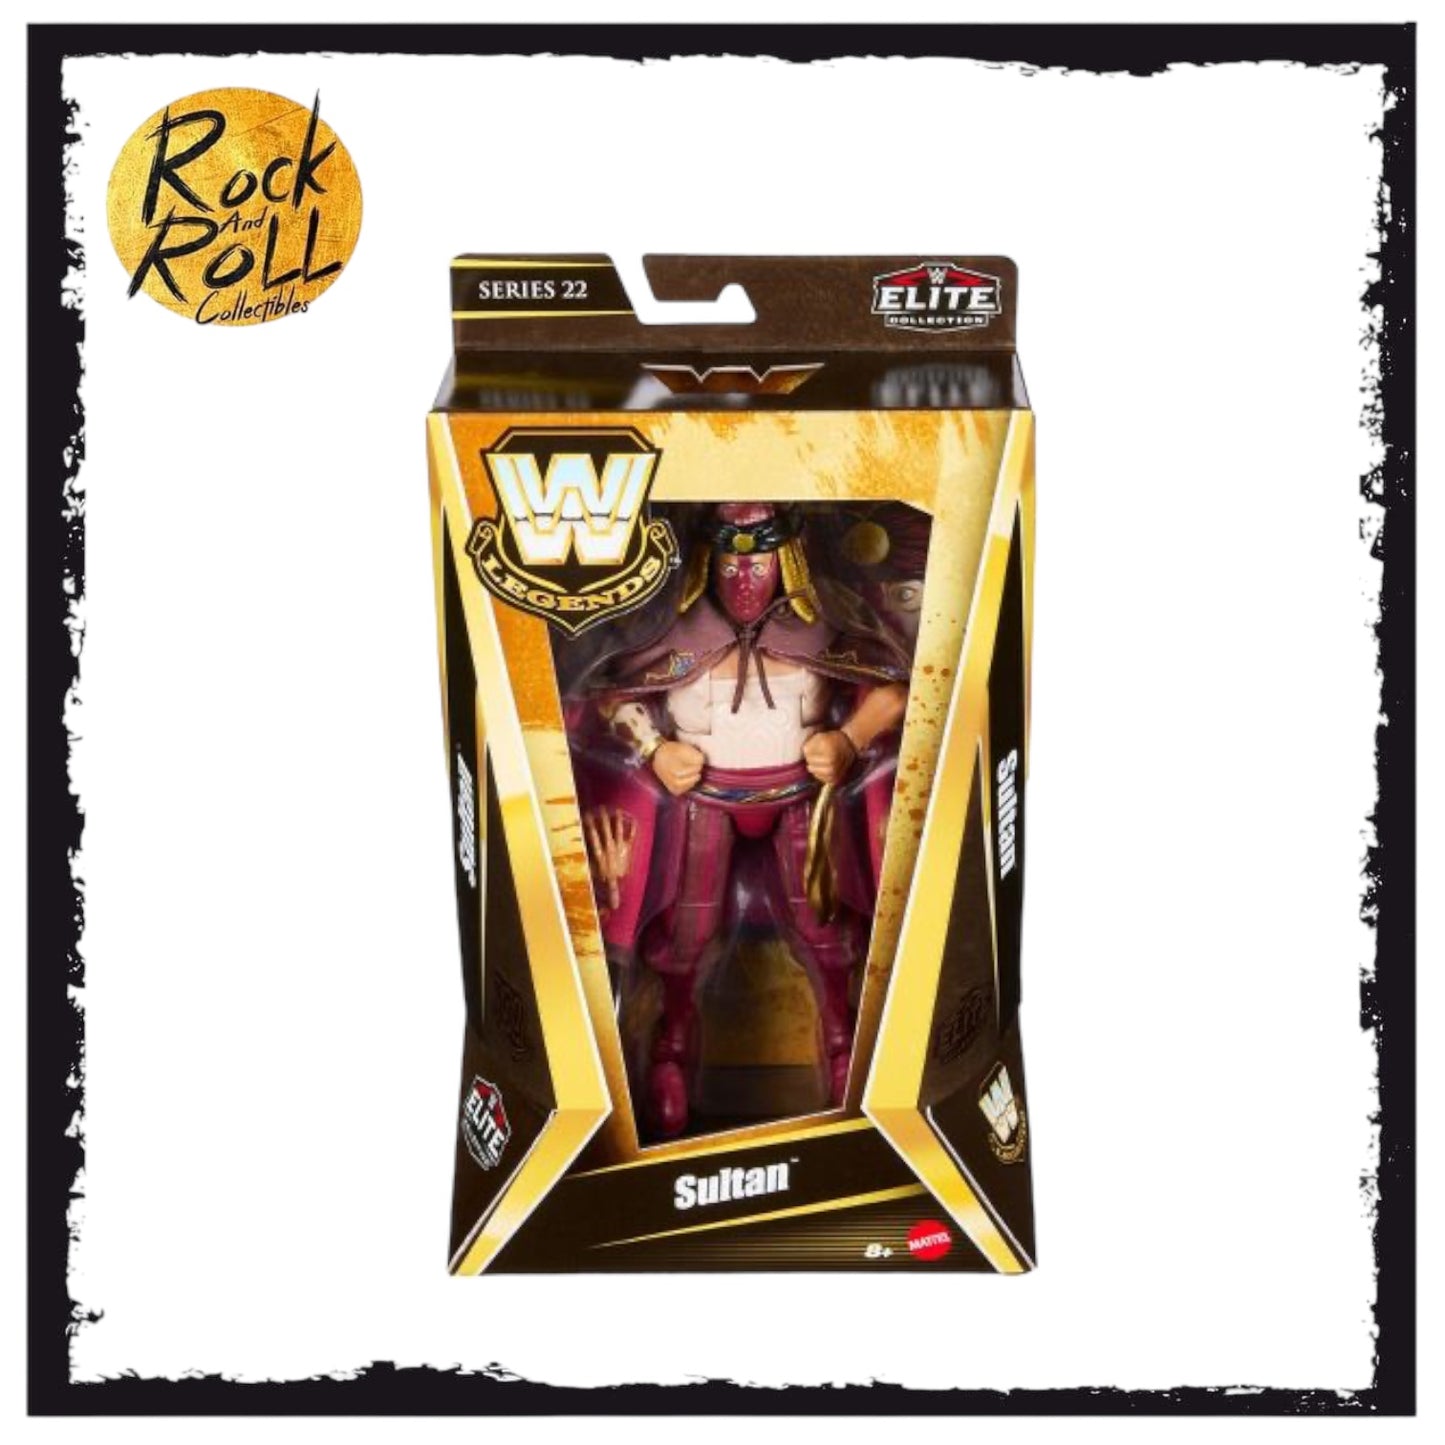 WWE Sultan Legends Elite Collection Series 22 Action Figure (Target Exclusive) PRE ORDER